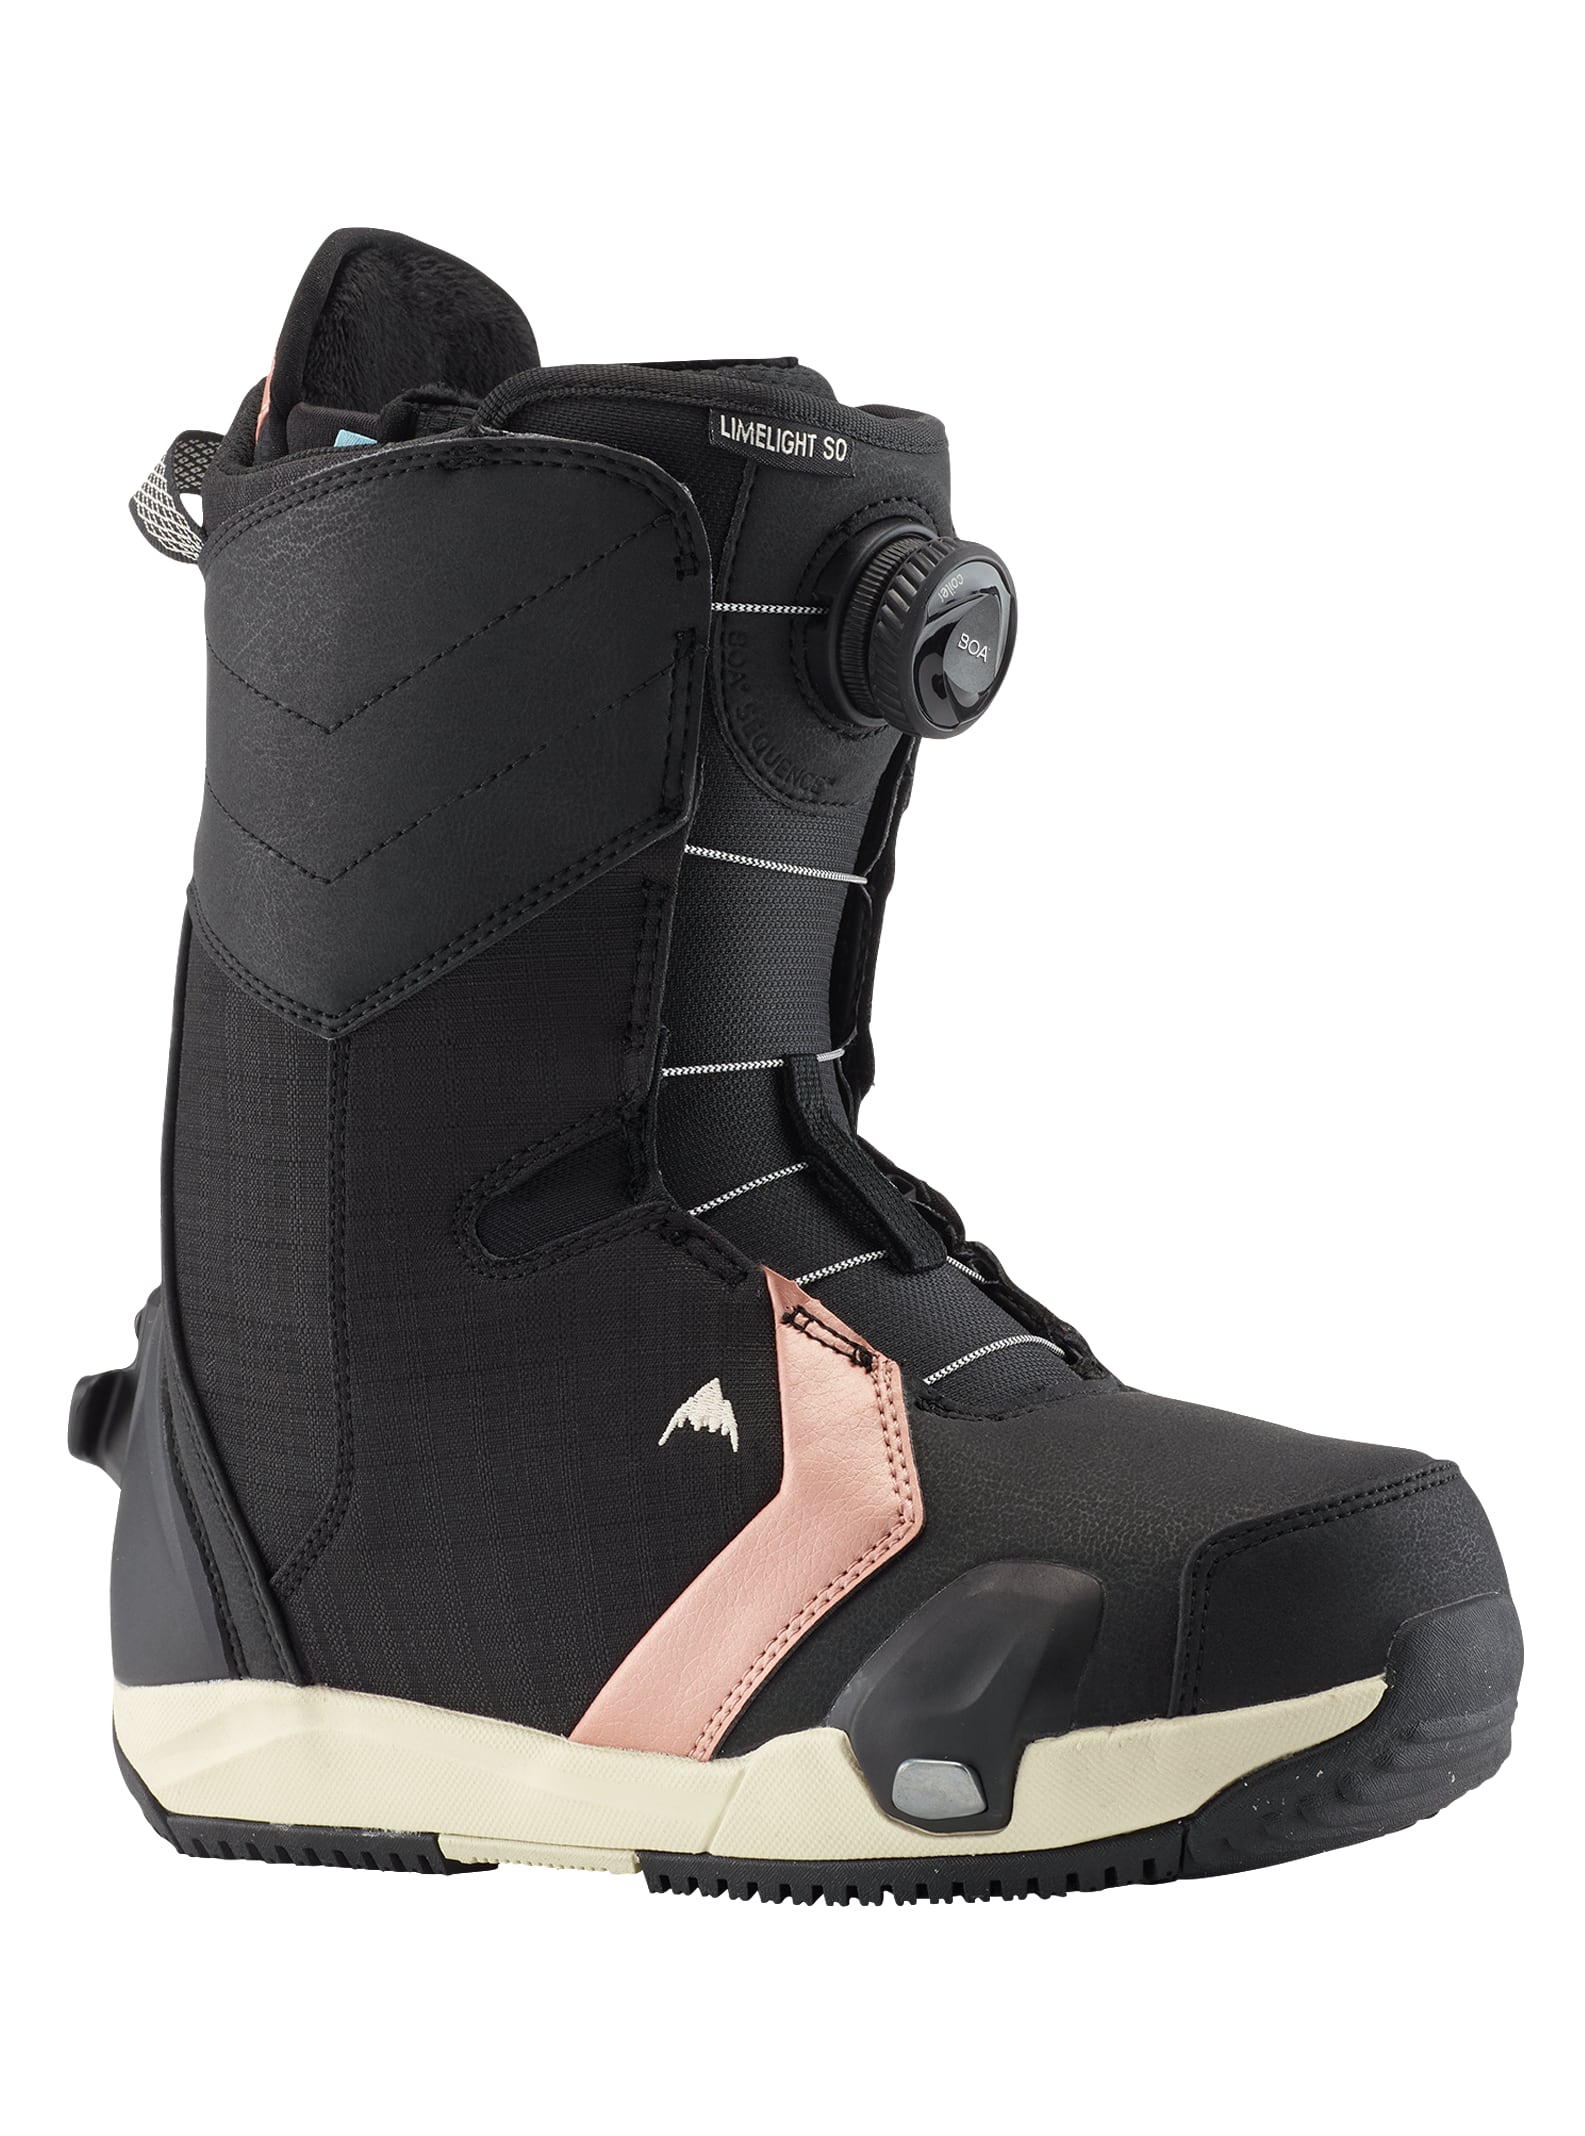 Burton - Boots de snowboard Step On Limelight femme, Black, 10